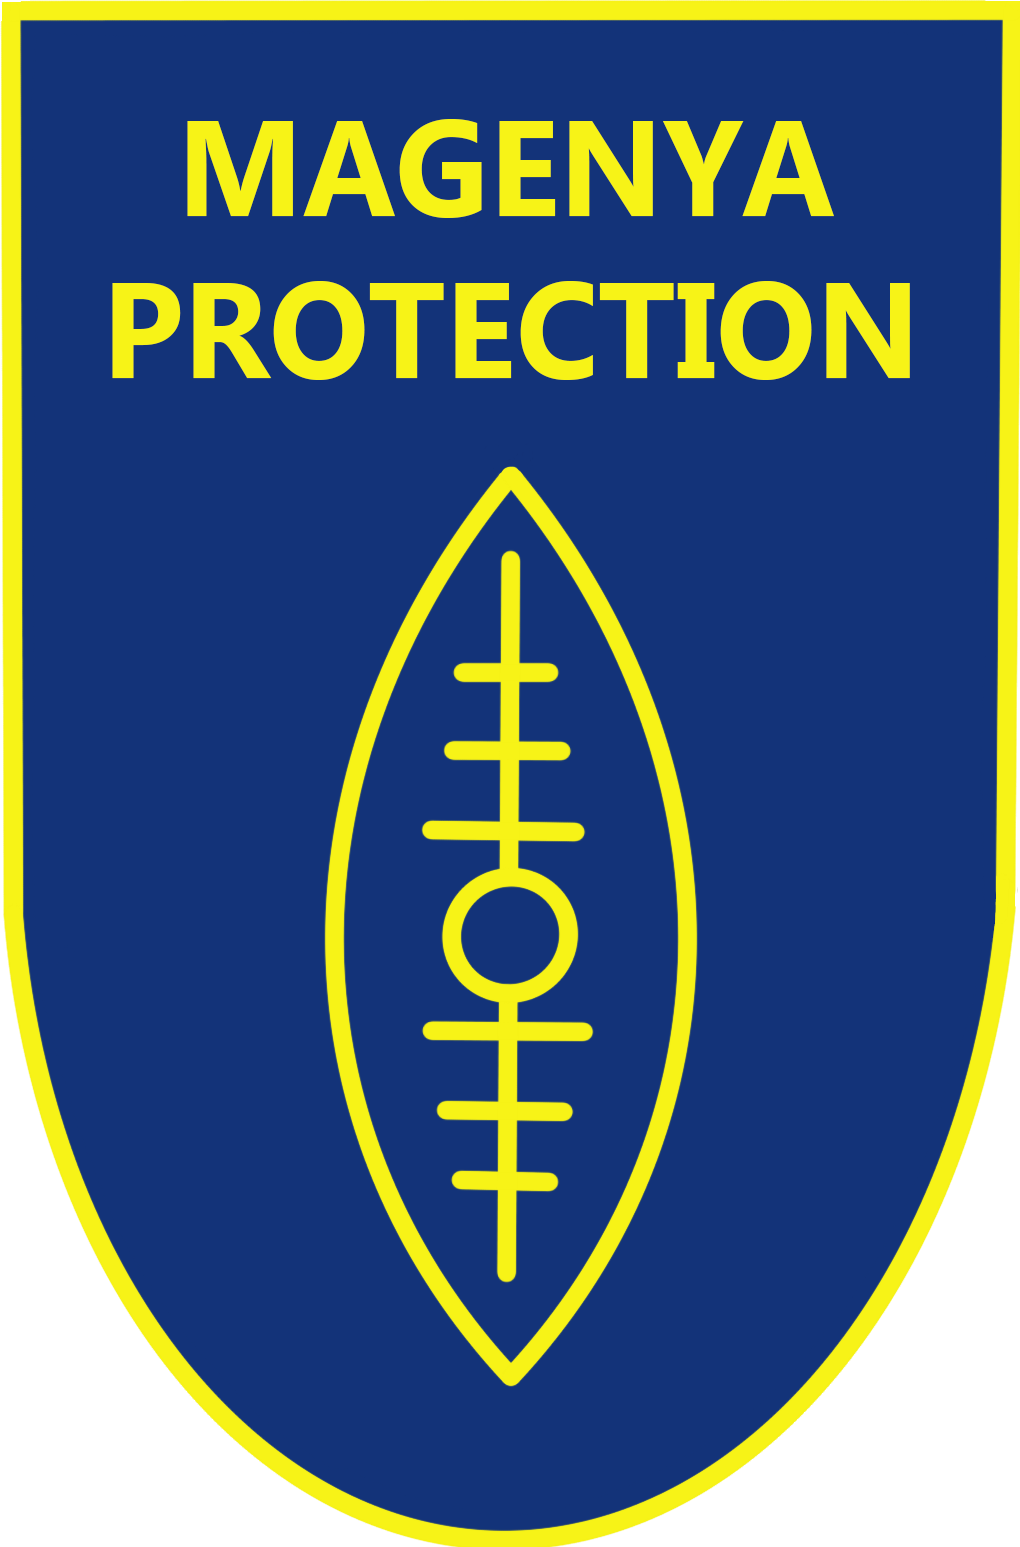 security company magenya protection